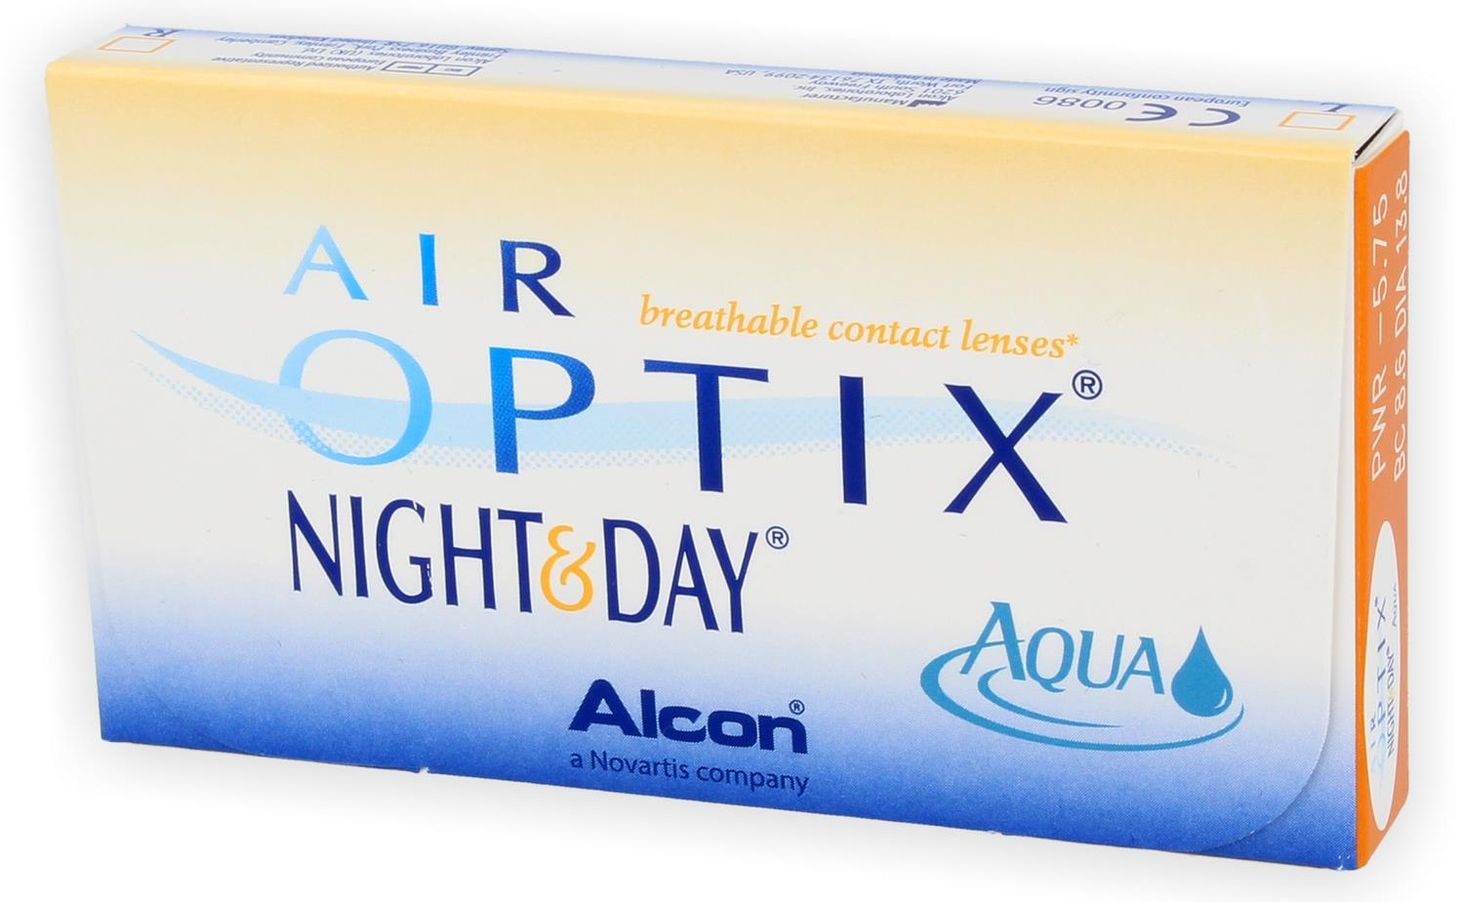 Alcon day night. Air Optix (Alcon) Night & Day Aqua (6 линз). Aqua Day. Air Optix Night & Day – контактные линзы срок годности. Alcon Aqua описание и характеристики.